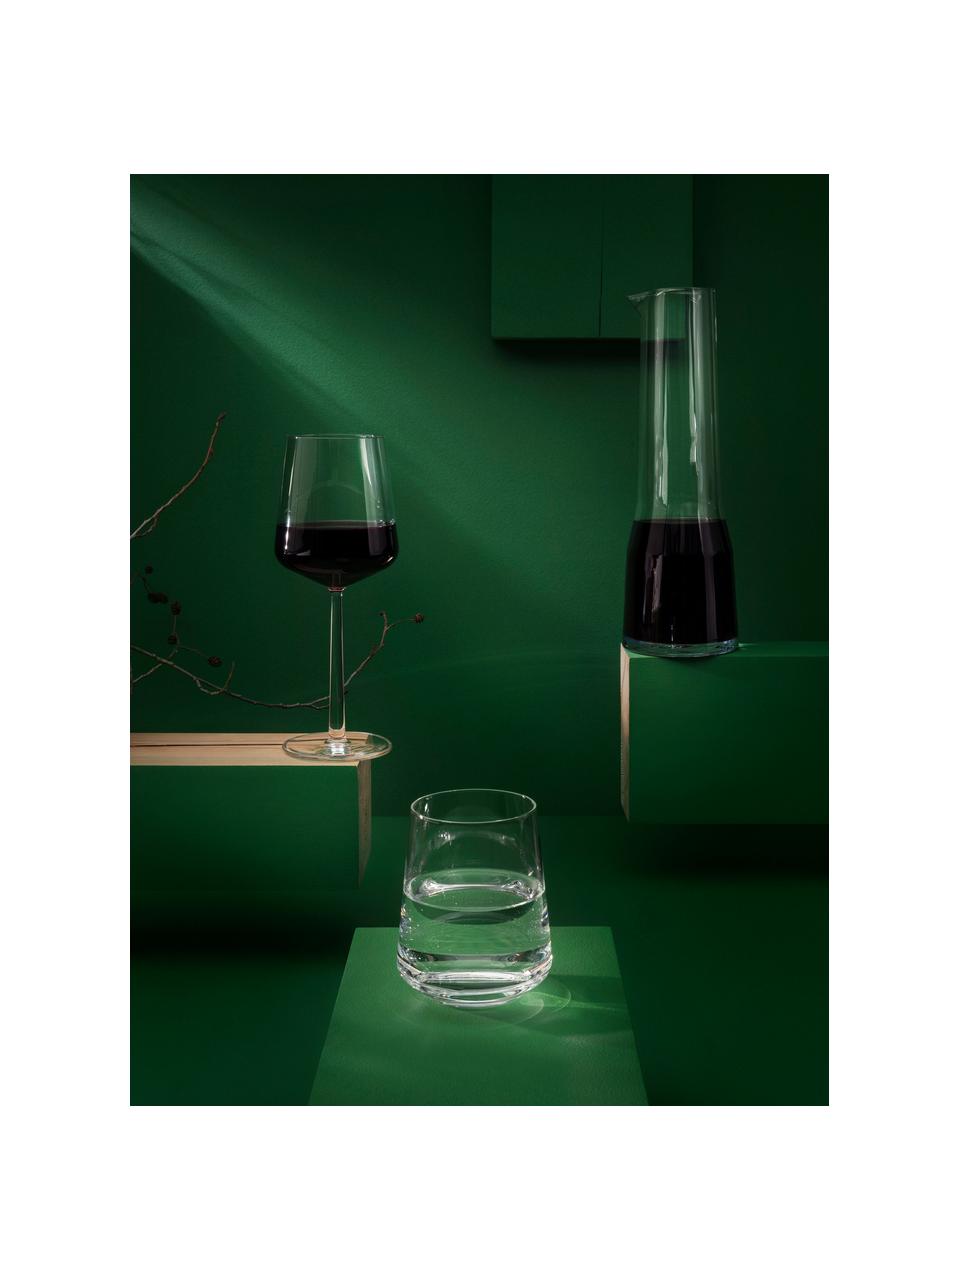 Waterglazen Essence, 2 stuks, Glas, Transparant, Ø 7 x H 10 cm, 350 ml